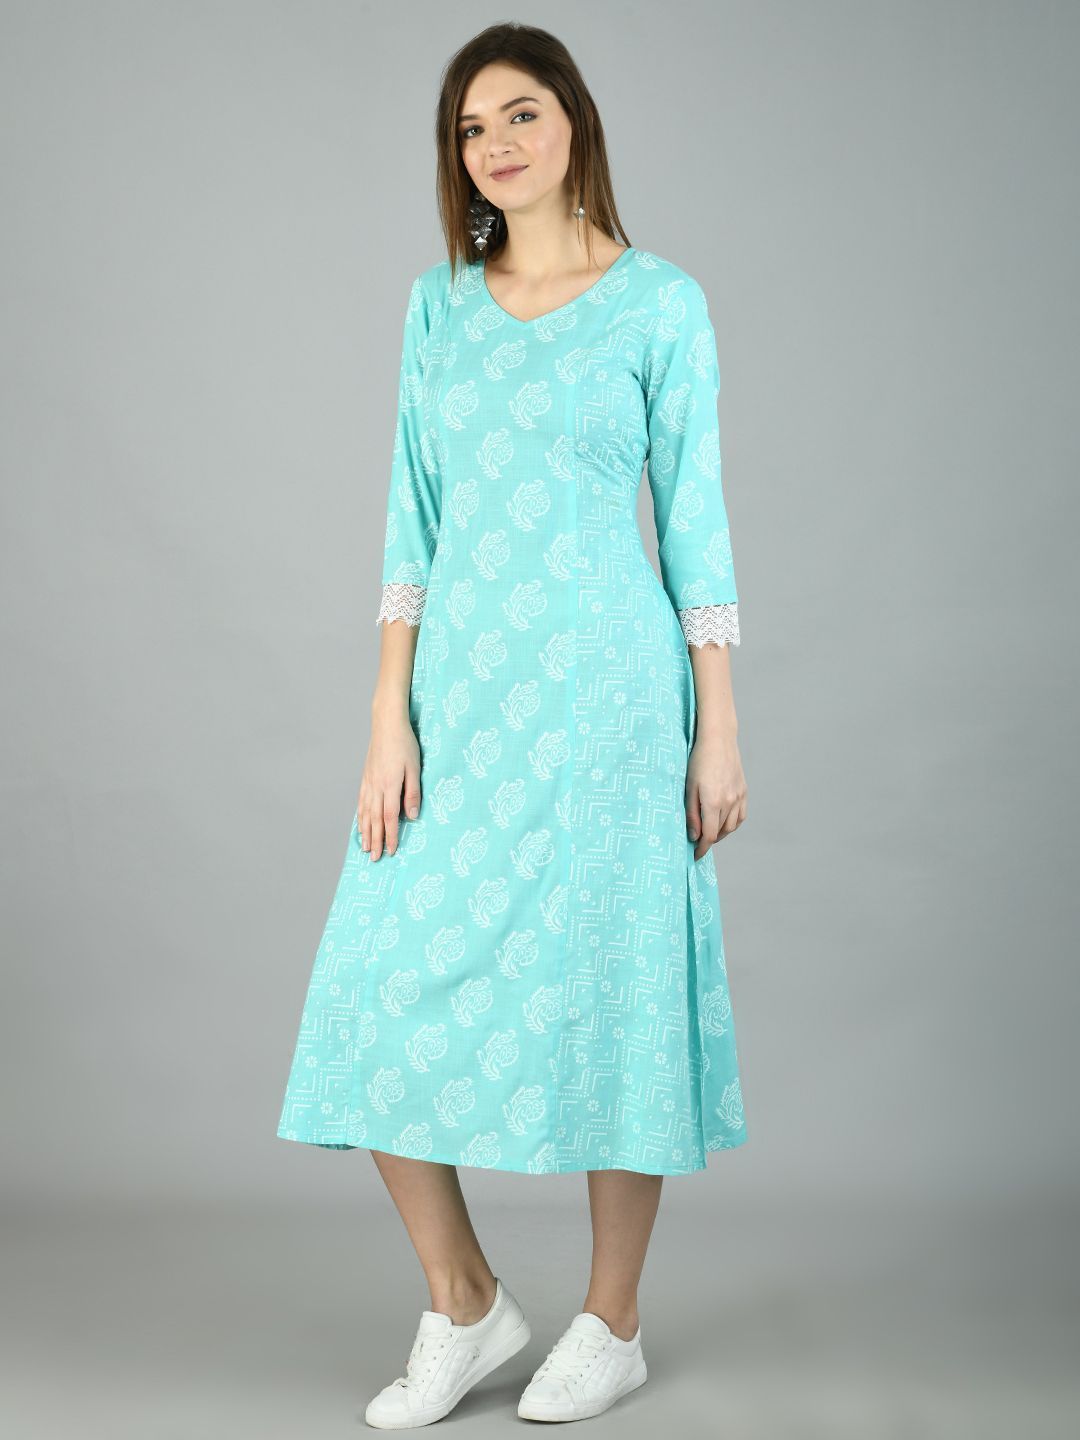 Women's Sky Blue Cotton Printed Full Sleeve V Neck Casual Dress - Myshka